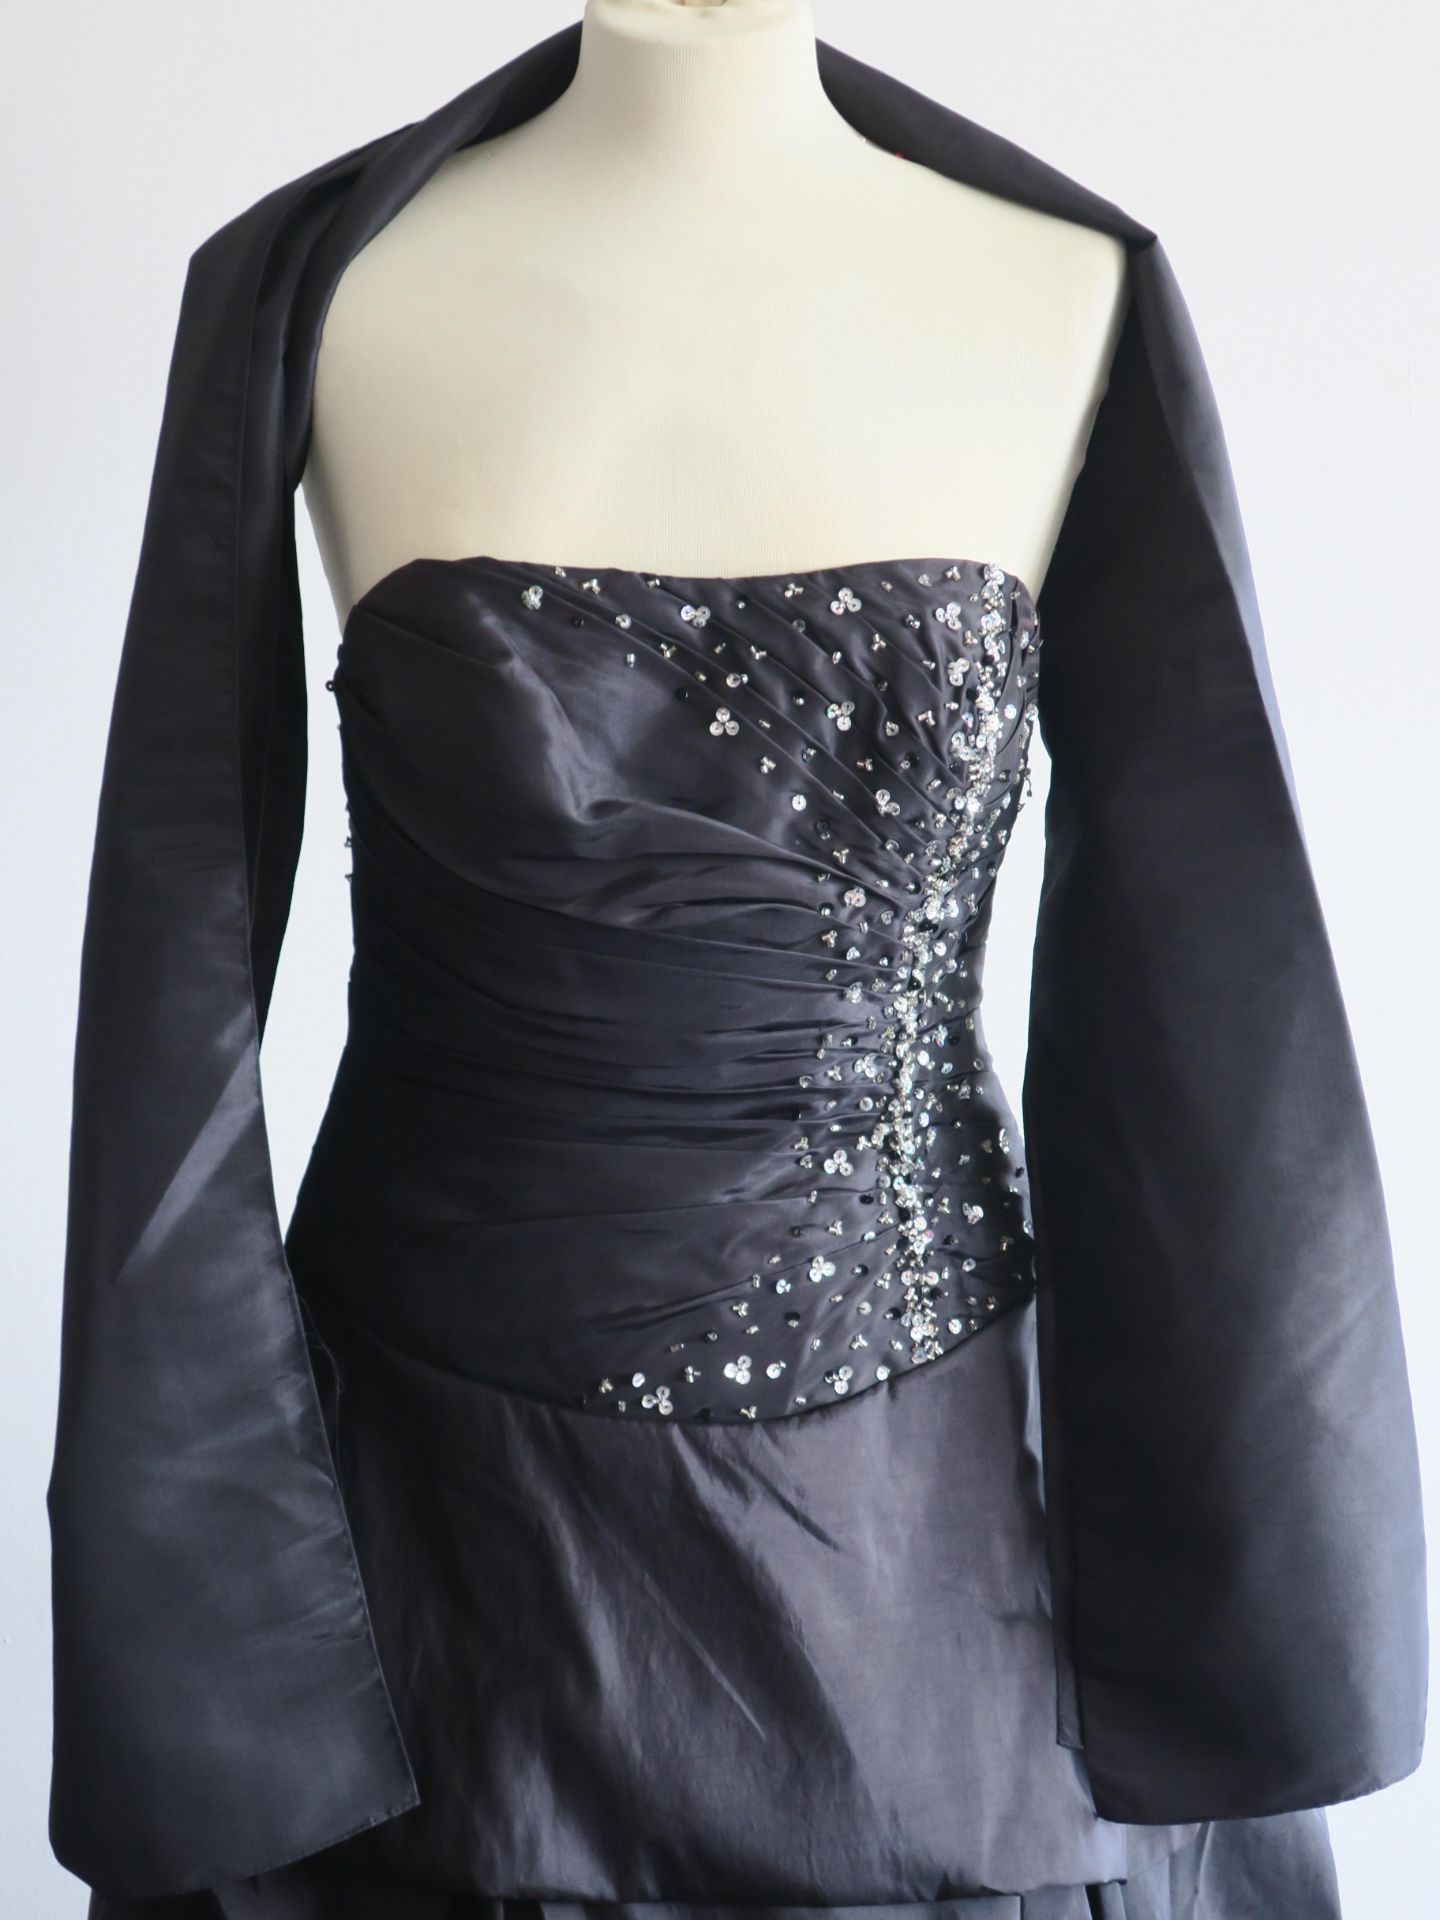 33 Dresses, Size 12 to include Princess, Oil Premium, Dazzle Prom, Together, Kaleidoscope, LA - Image 35 of 77